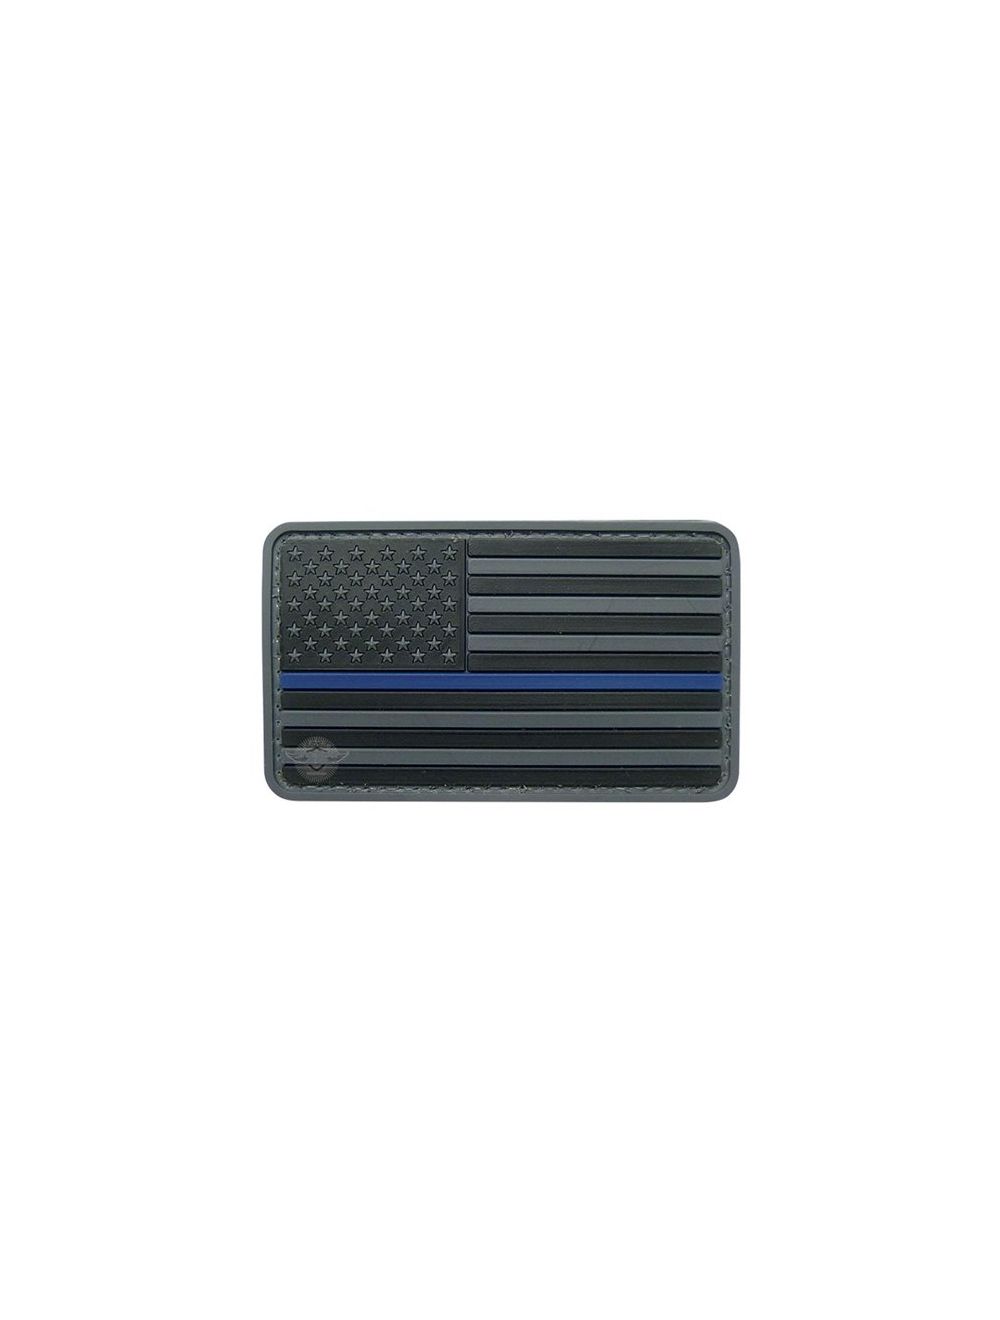 U.S. Flag Black w/ Blue Stripe Morale Patch